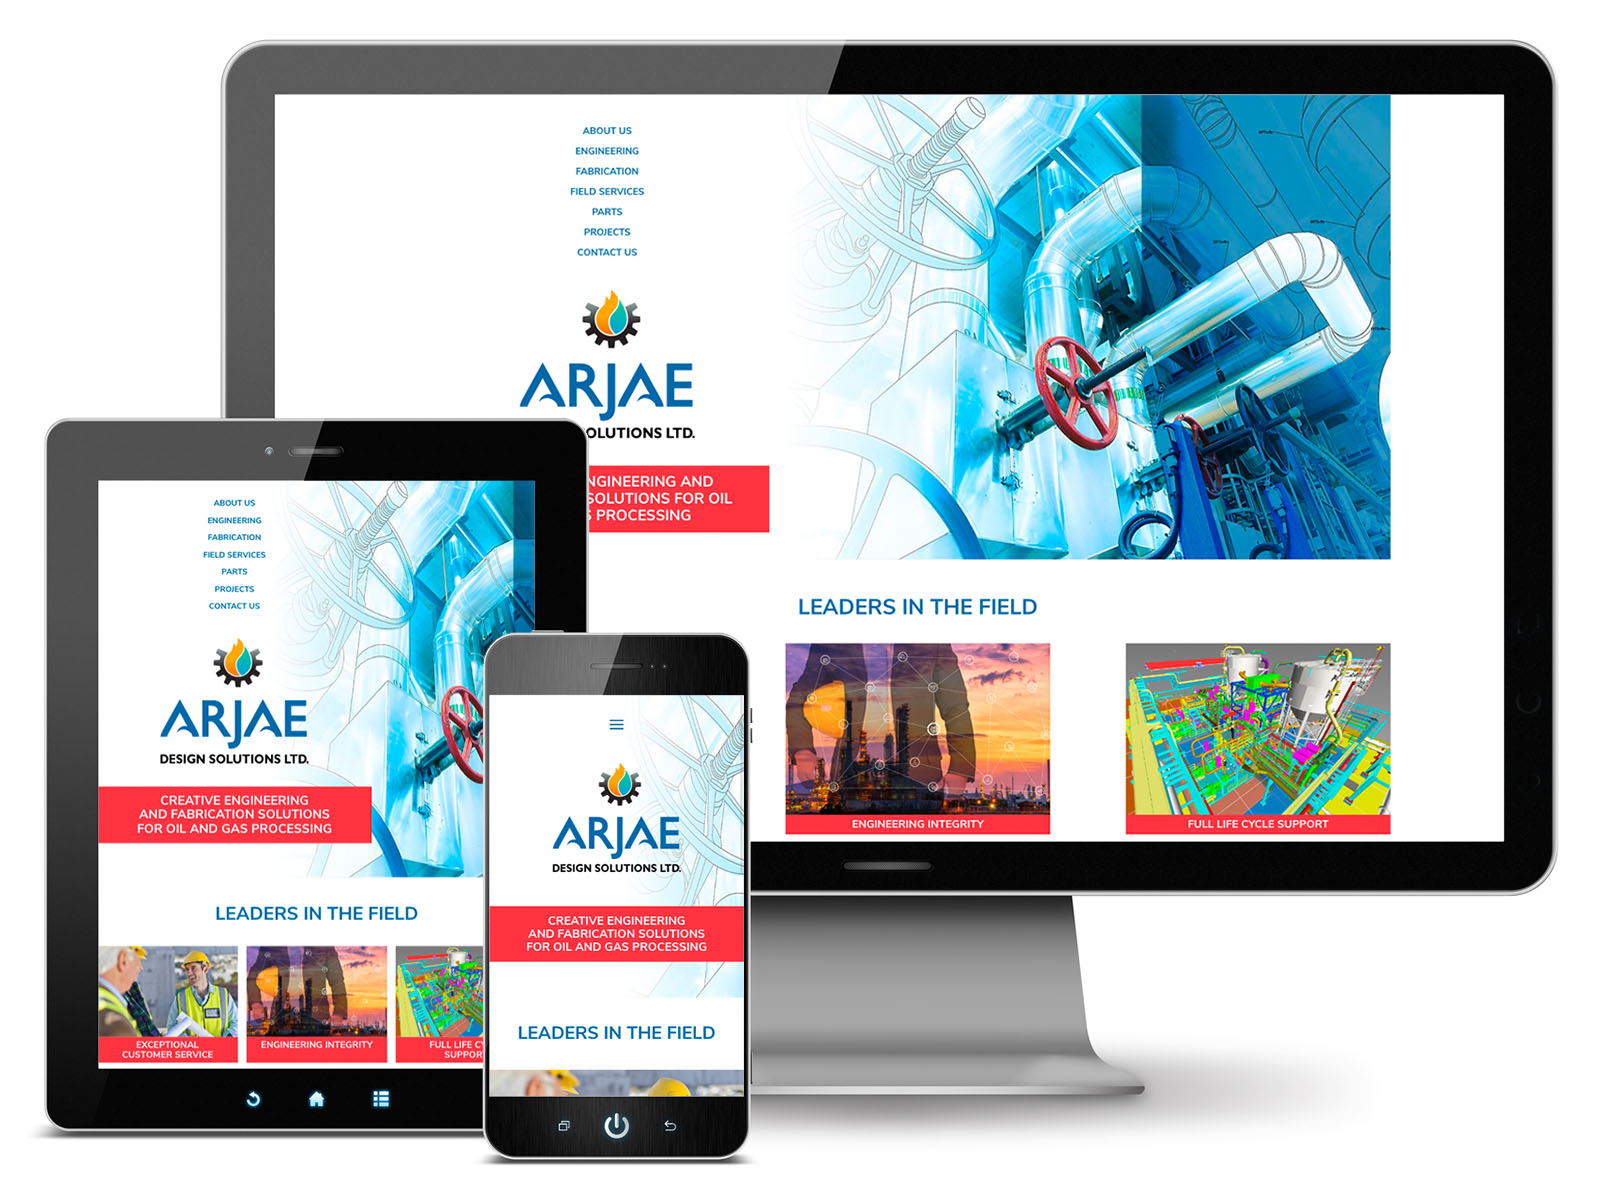 ARJAE Design Solutions